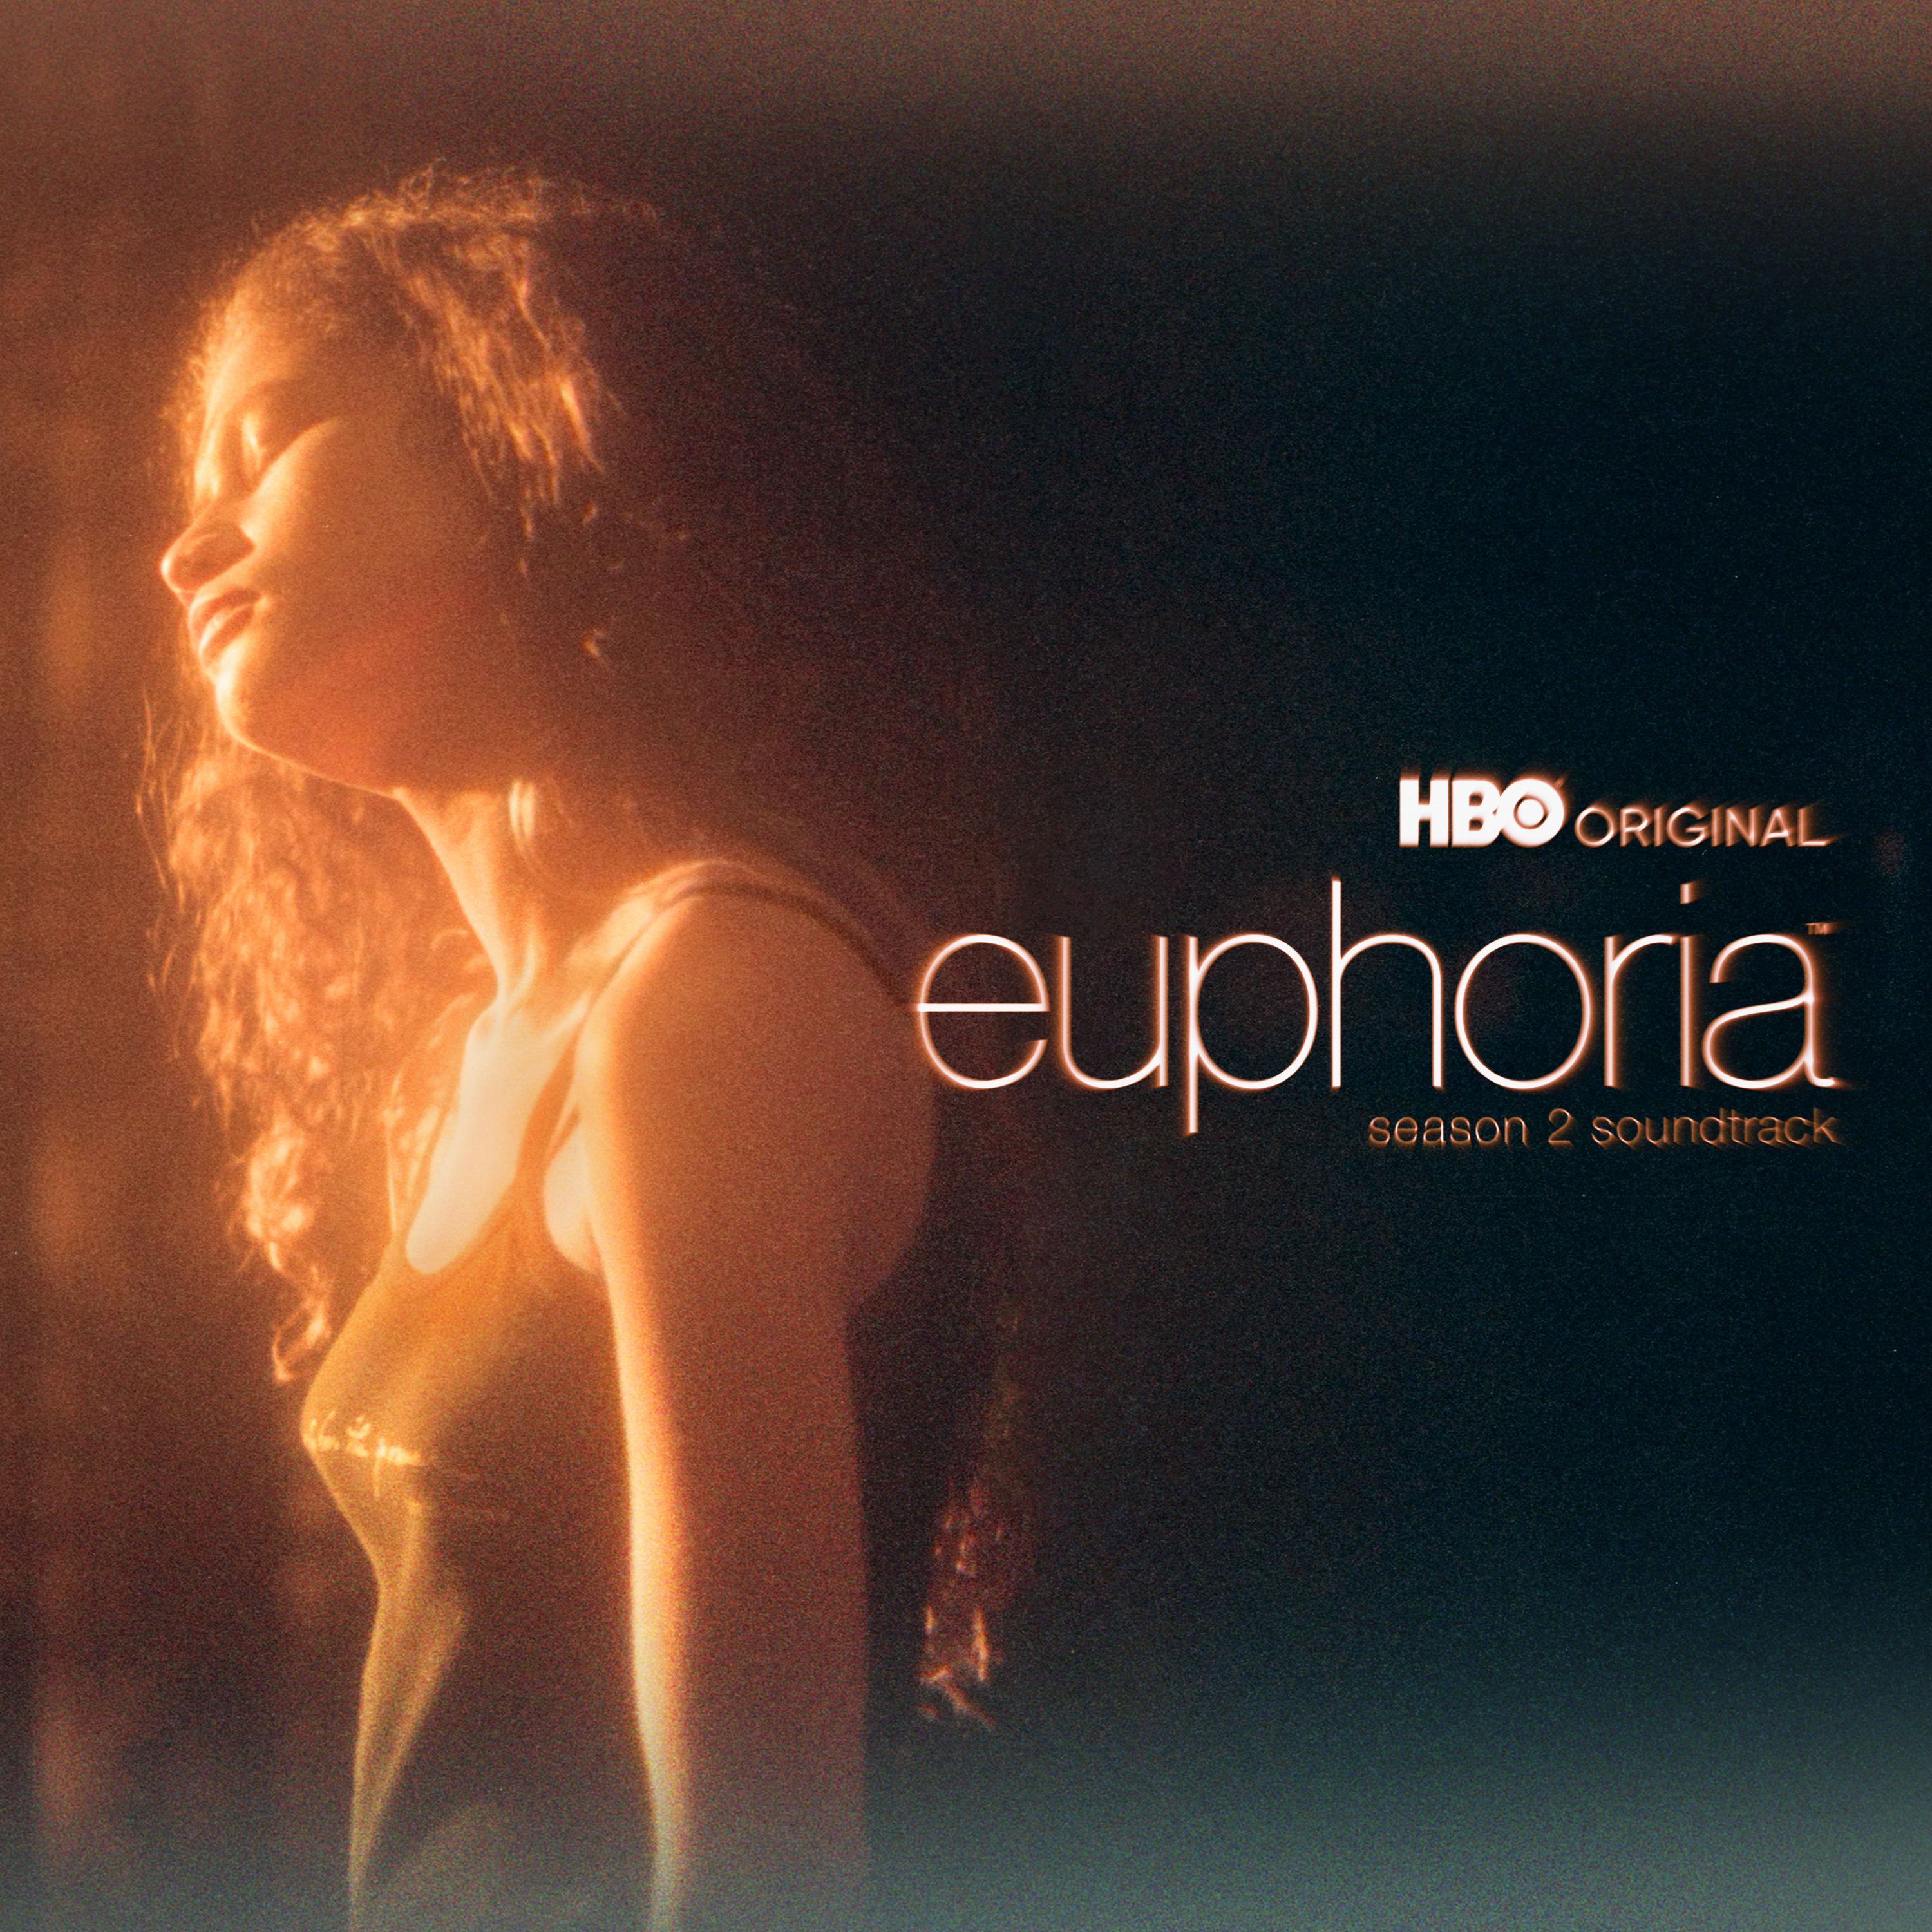 James Blake & Labrinth — (Pick Me Up) Euphoria cover artwork